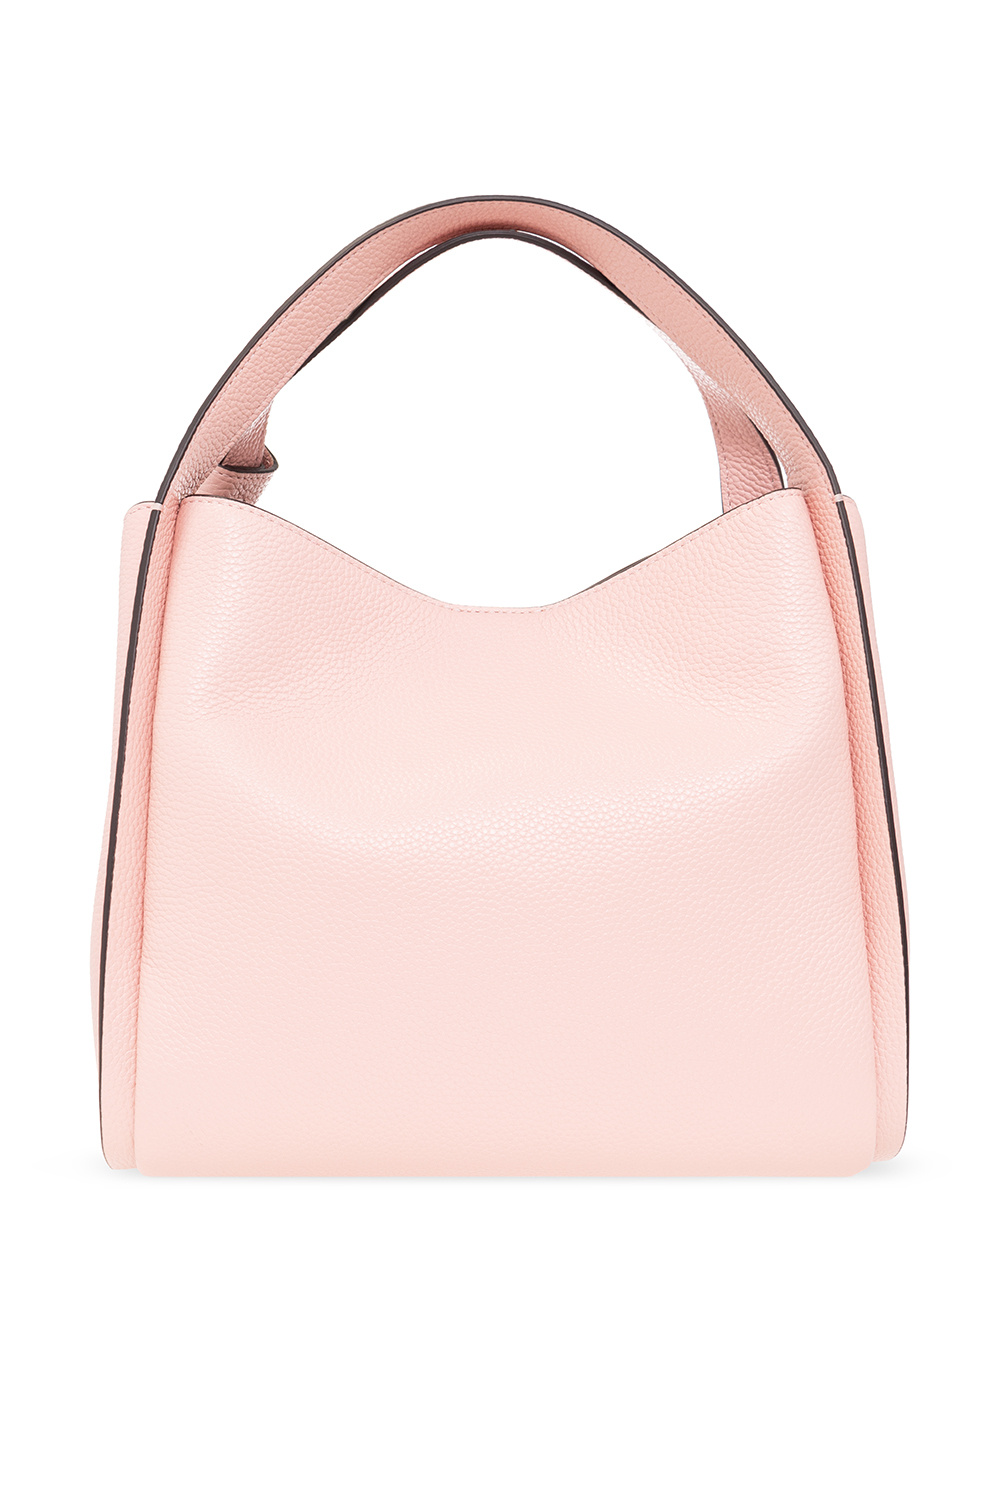 Kate Spade Knott Medium Saddle Bag Crossbody Coral Gable Pink Pebbled  Leather 